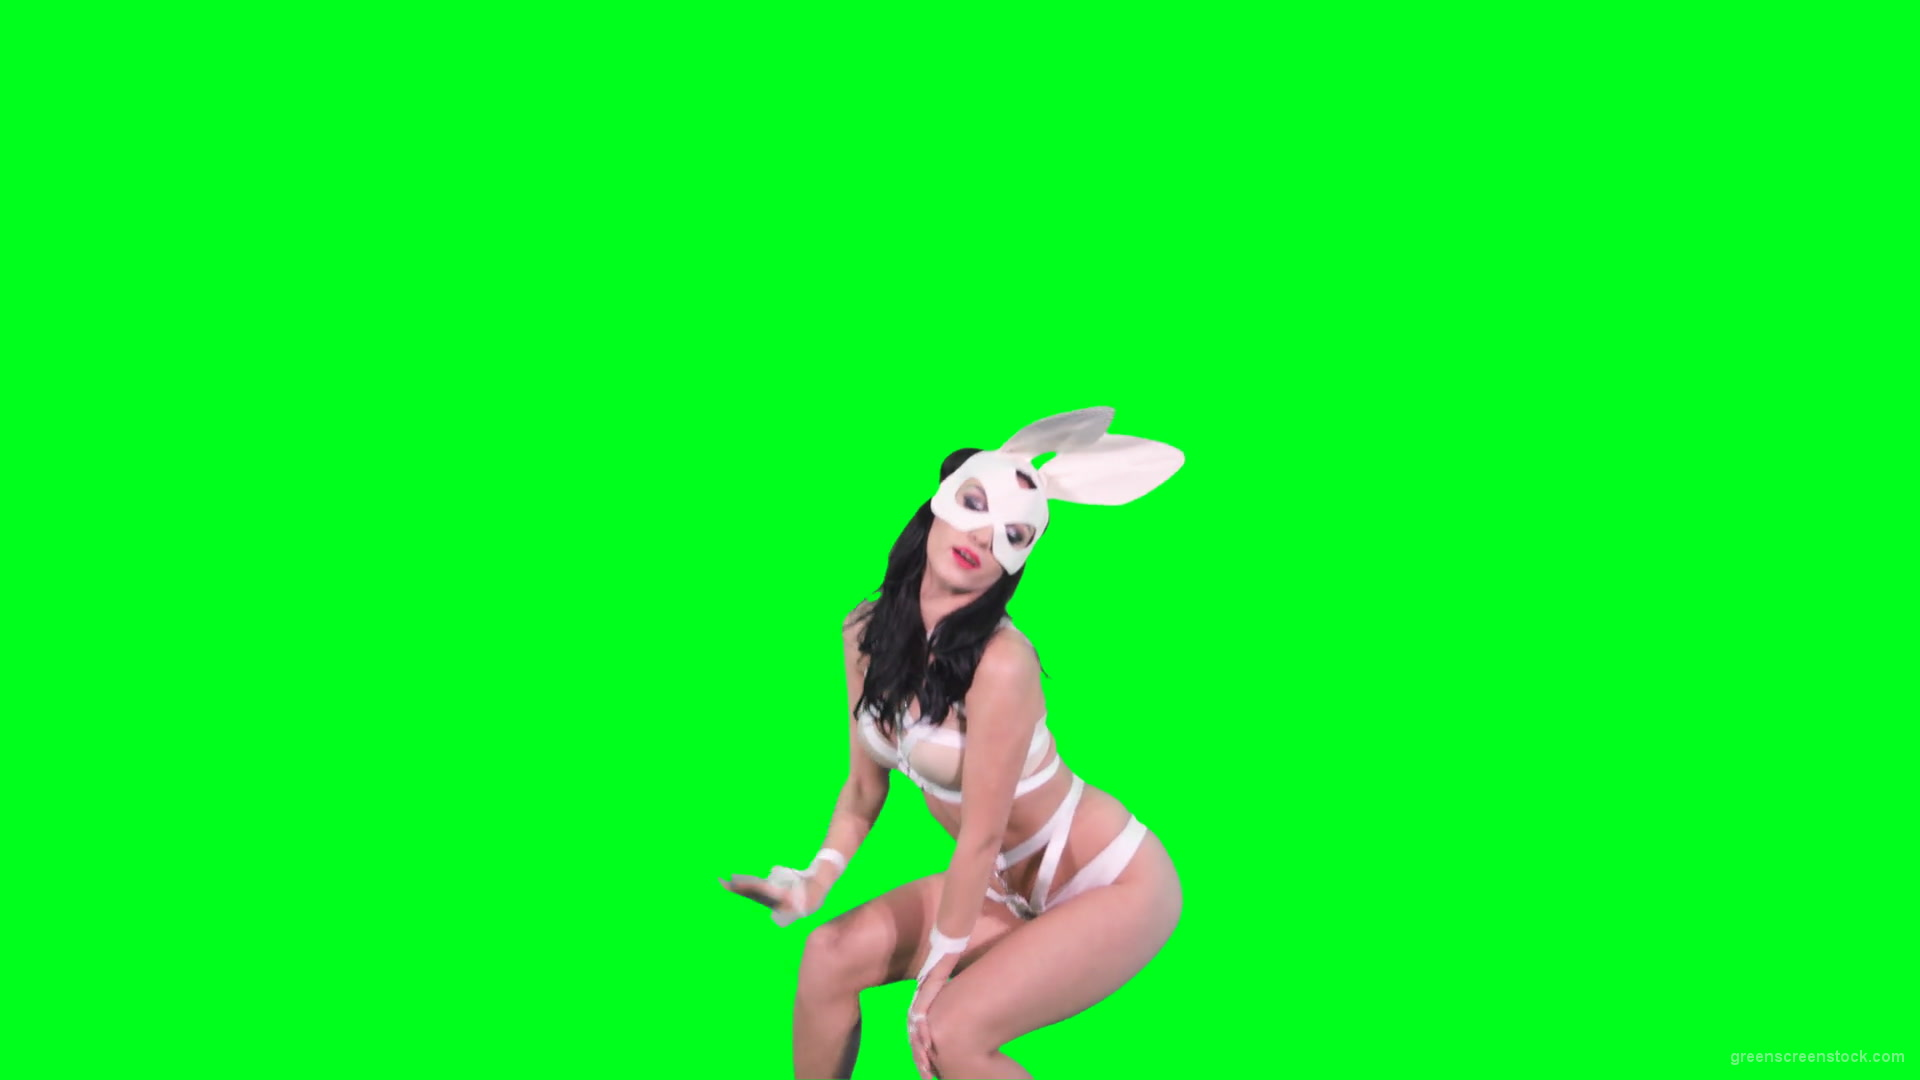 Green-Srcreen-Girl-in-rabbit-costume-sending-air-kiss-4k-Video-Footage-1920_002 Green Screen Stock